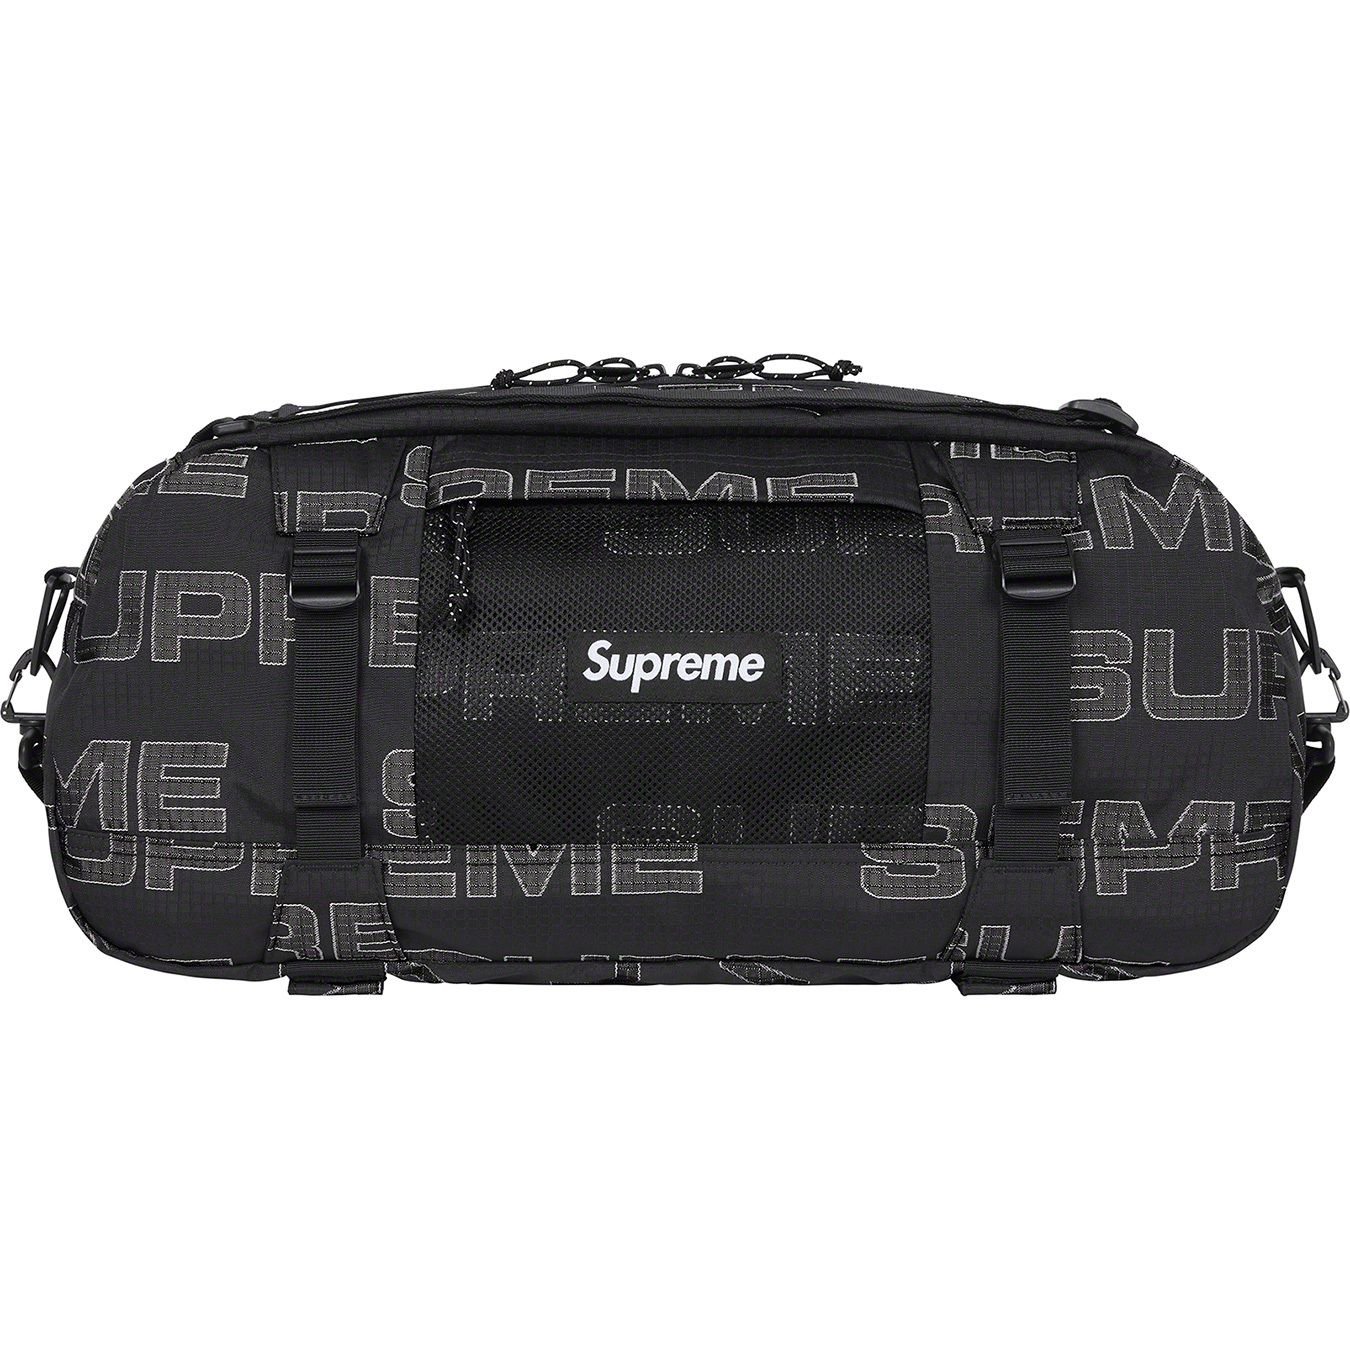  Supreme Duffle Bag FW21 - Black 